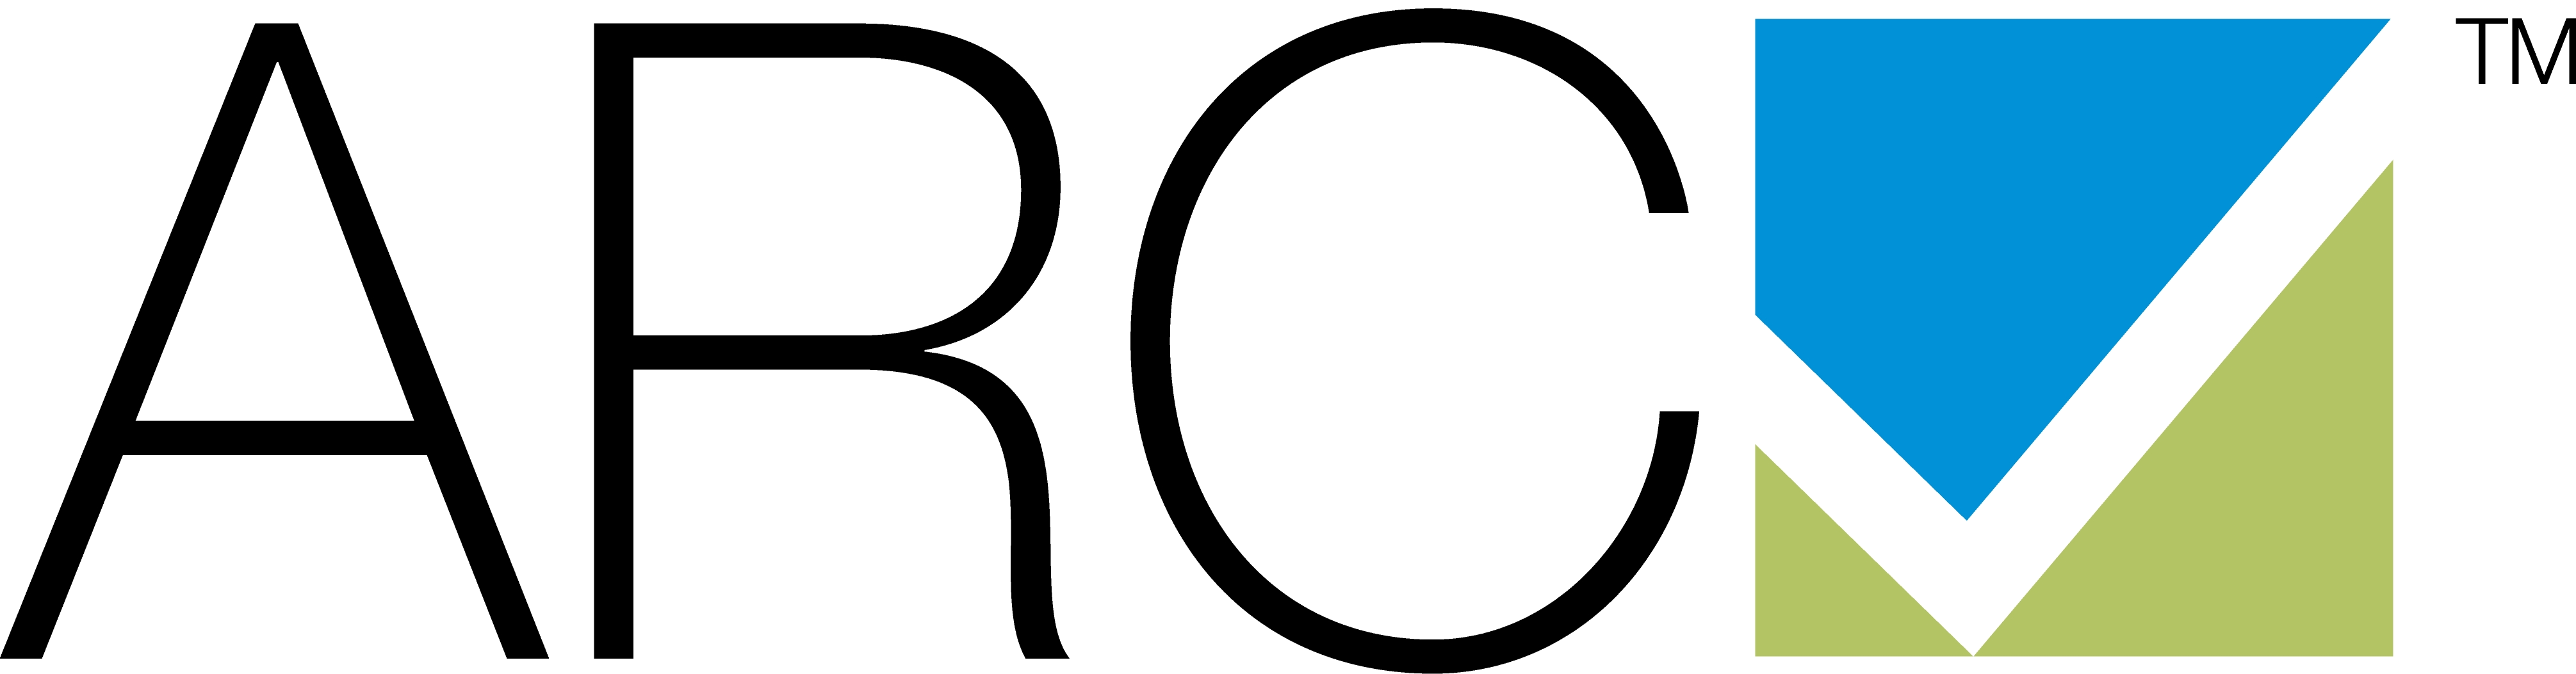 Arc tick Logo Image